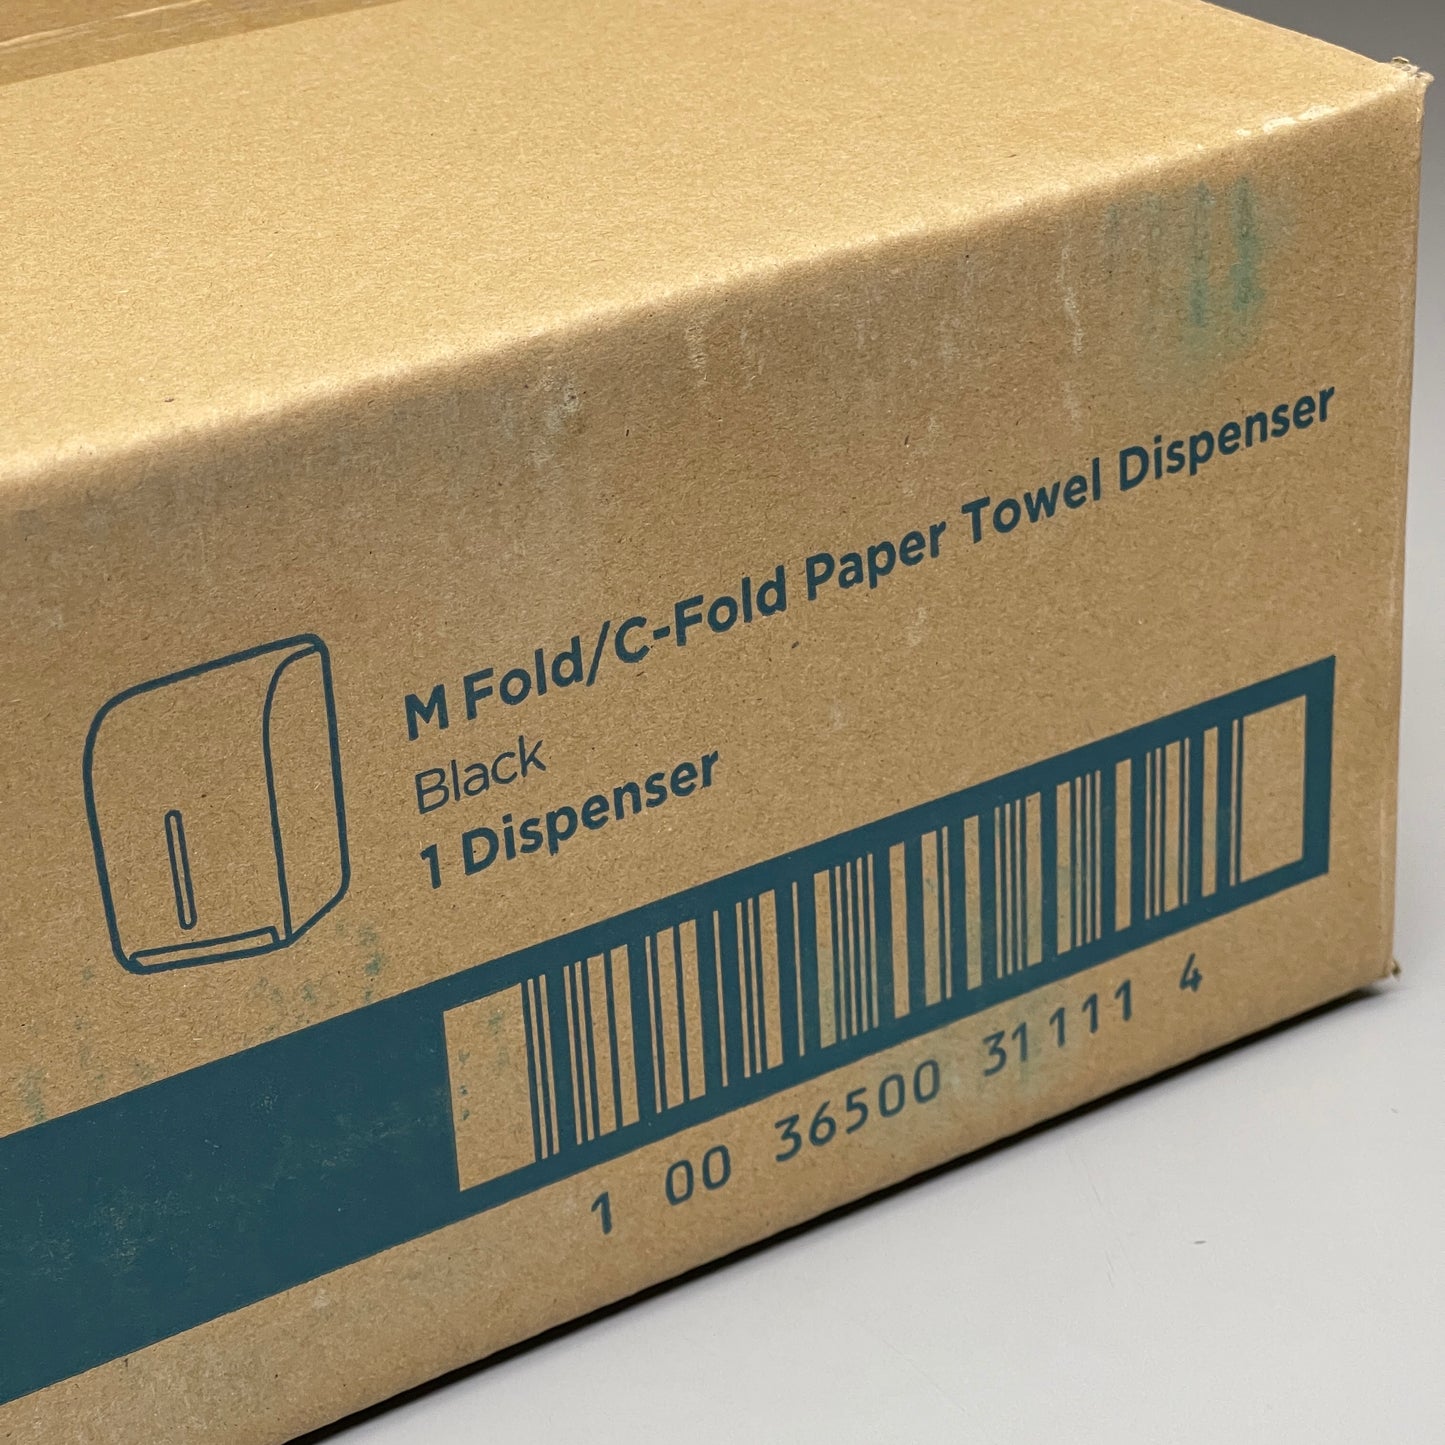 GEORGIA PACIFIC C-Fold/Multifold Paper Towel Dispenser Black 56650A (New)